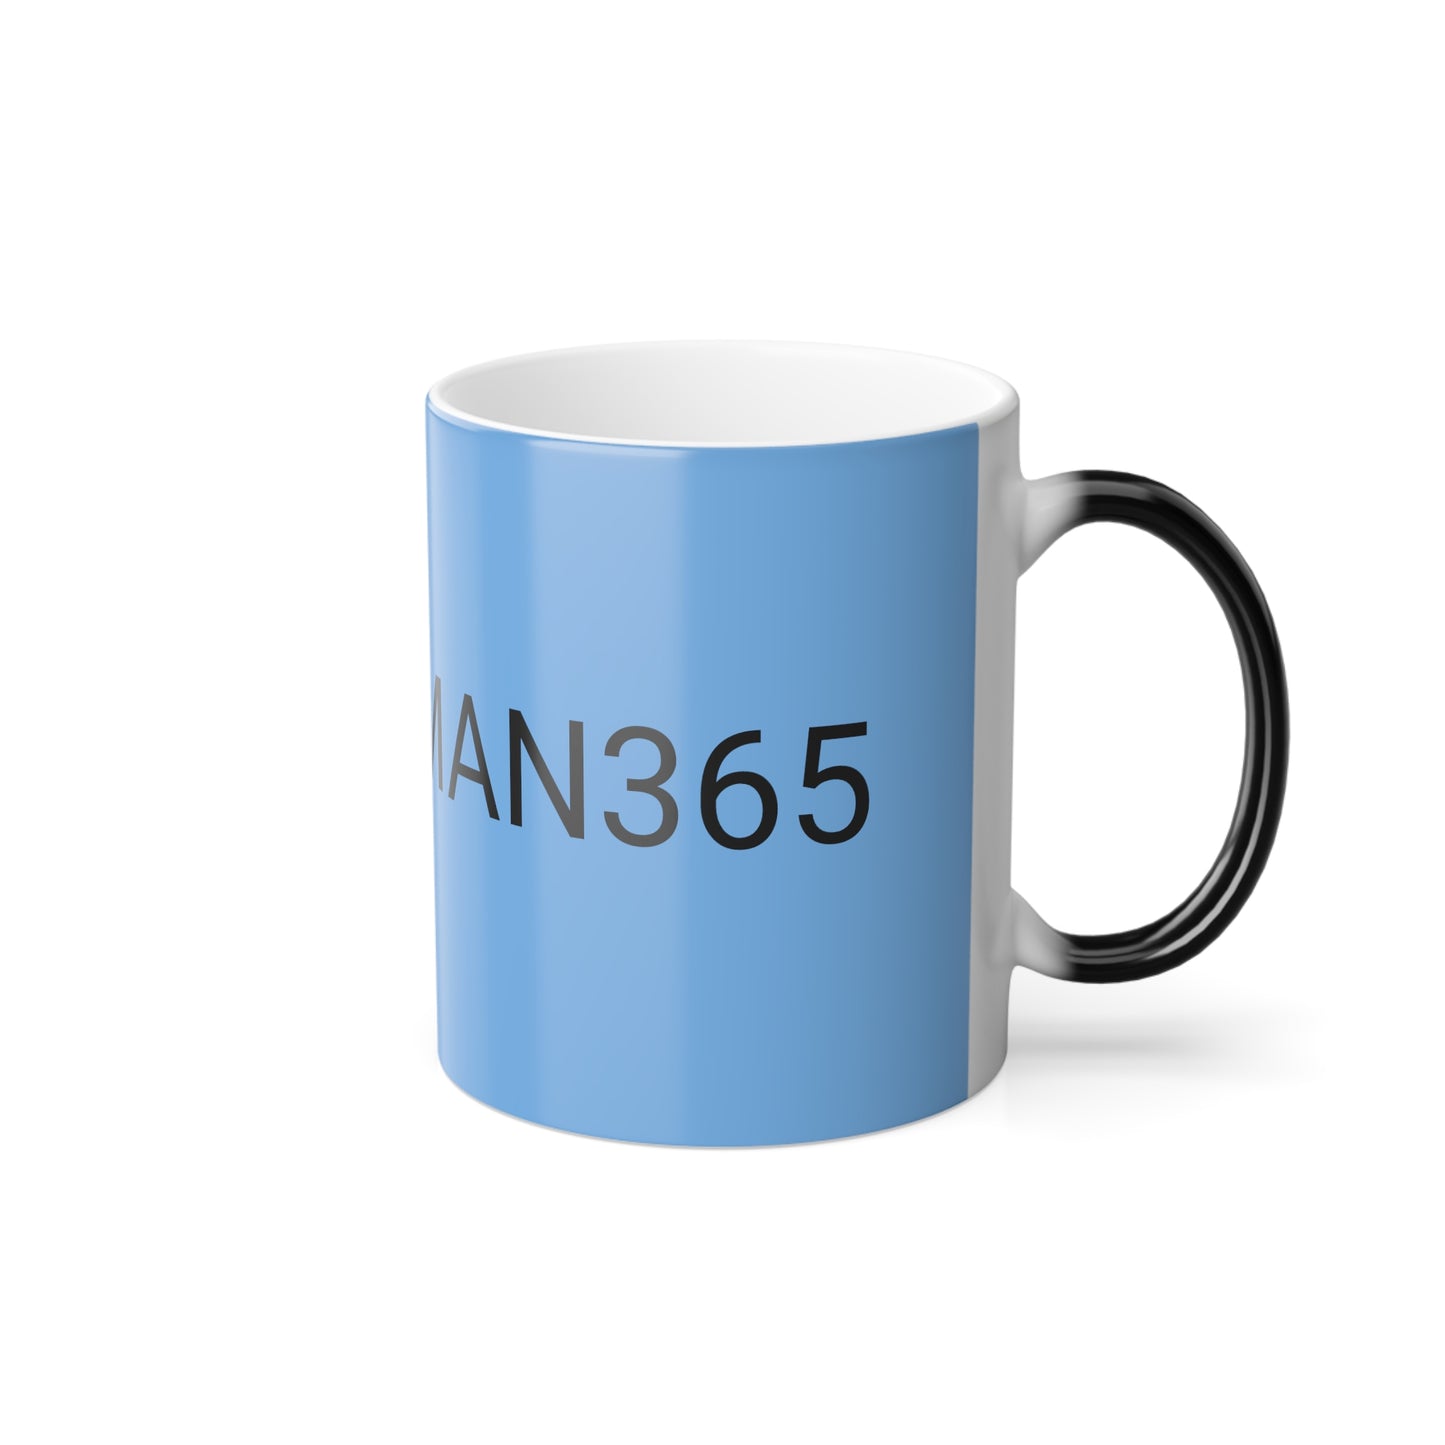 BOSS LADY DENEQUIA "BOSS MAN 365" Inspired  Color Morphing Mug, 11oz